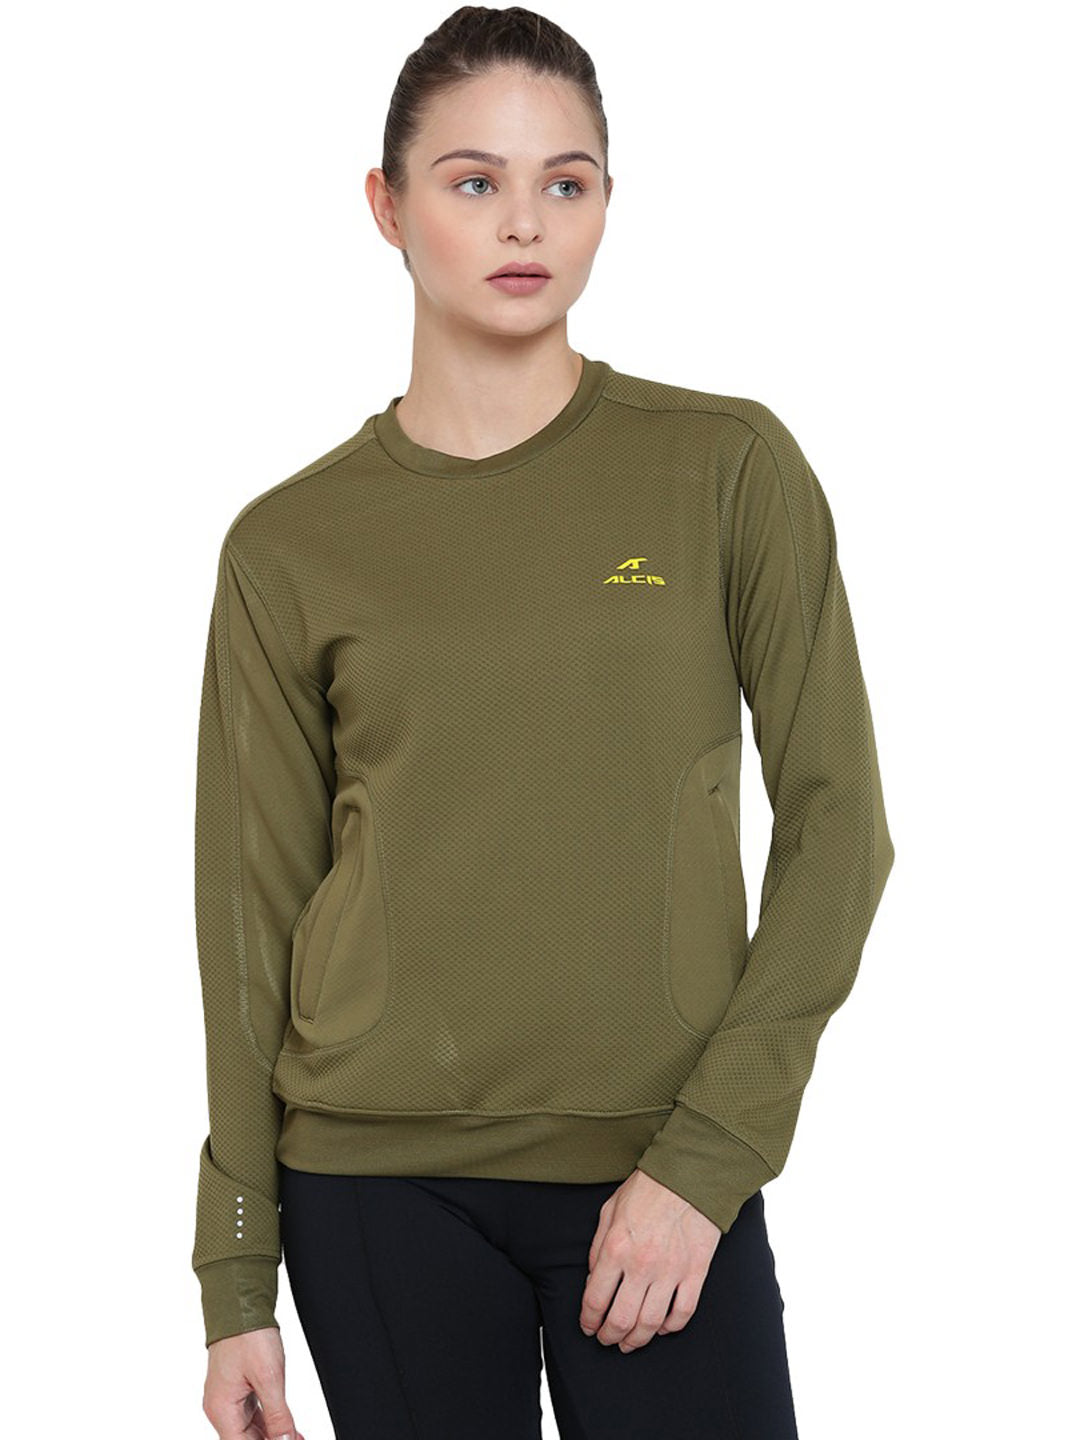 Alcis Women Olive Green Solid Sweatshirt 234WSS071 234WSS071-S